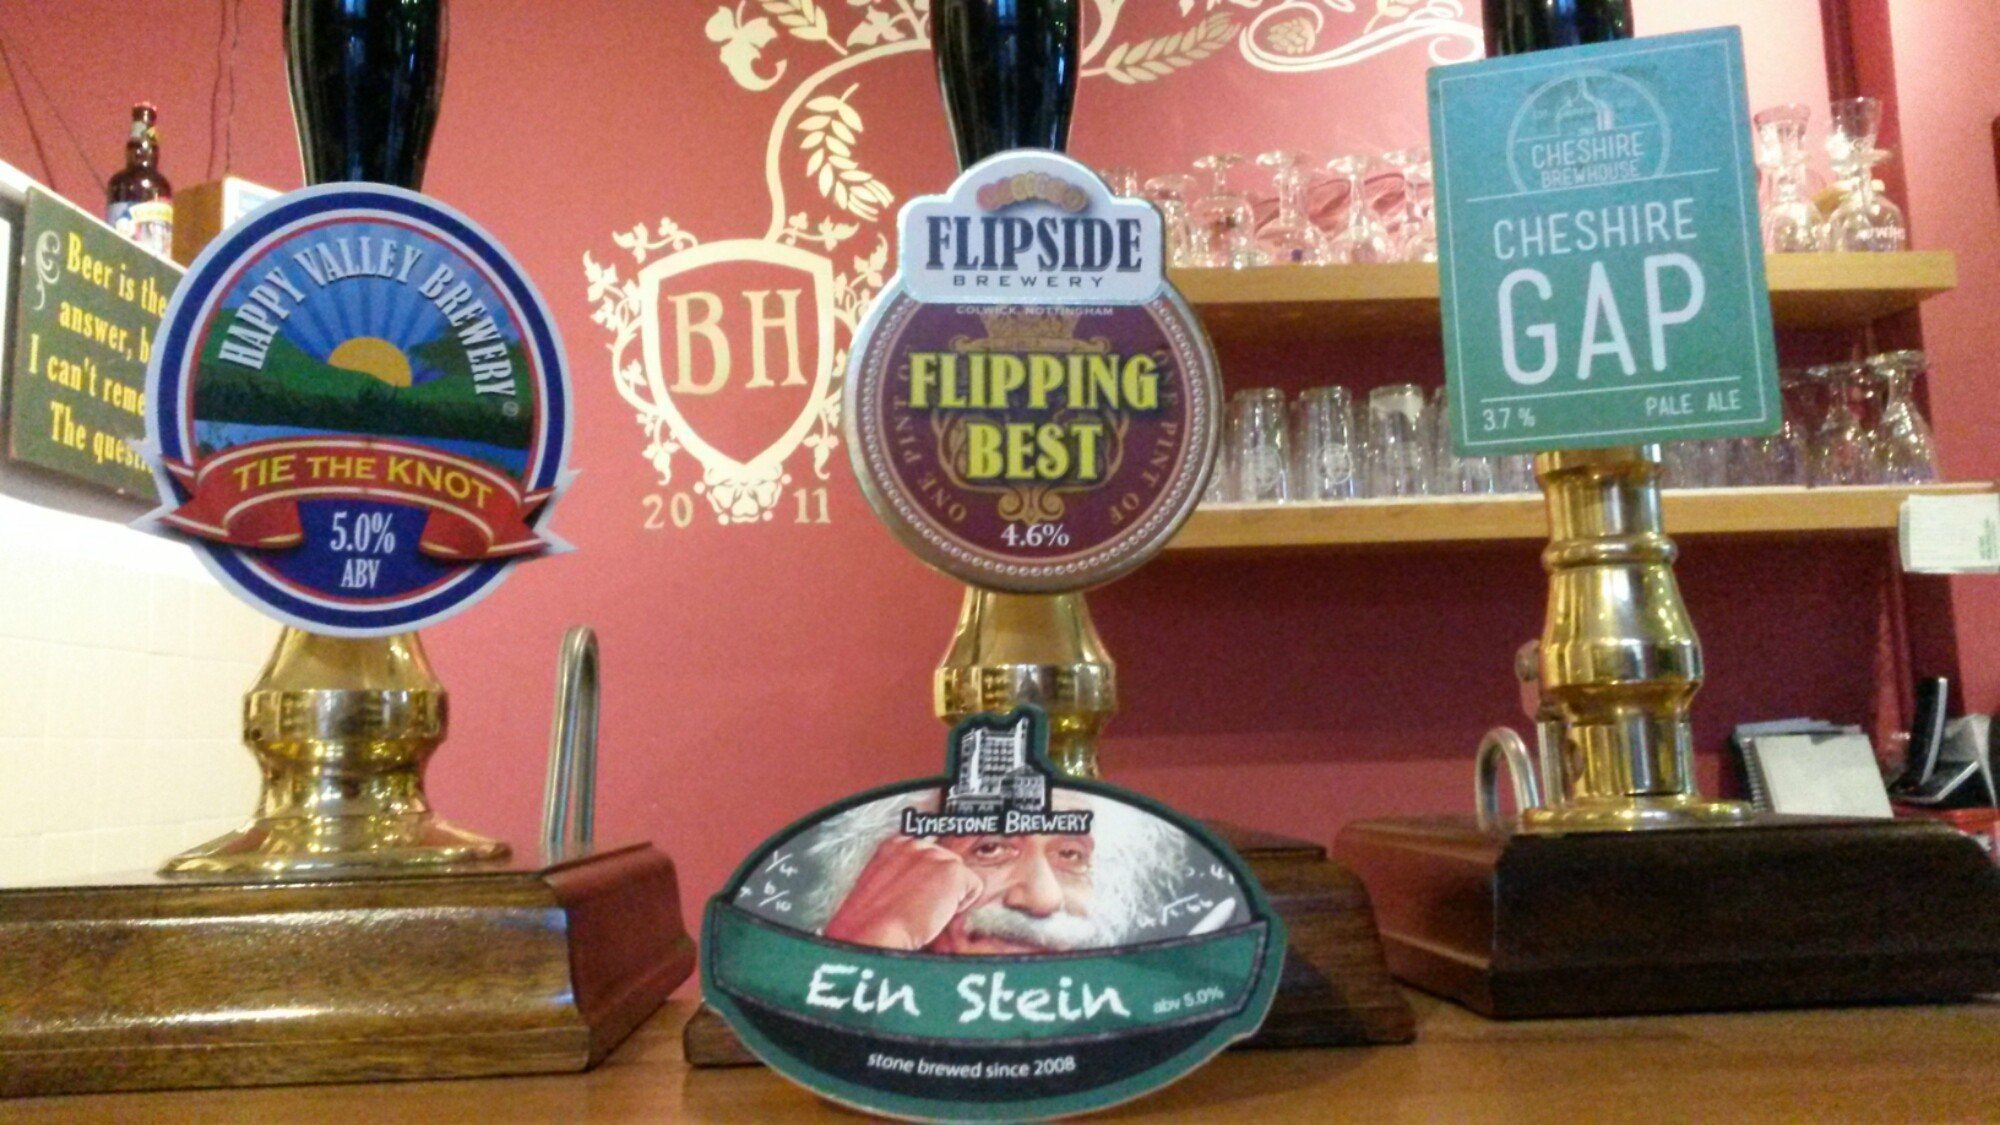 Flipside Brewery brewery from United Kingdom